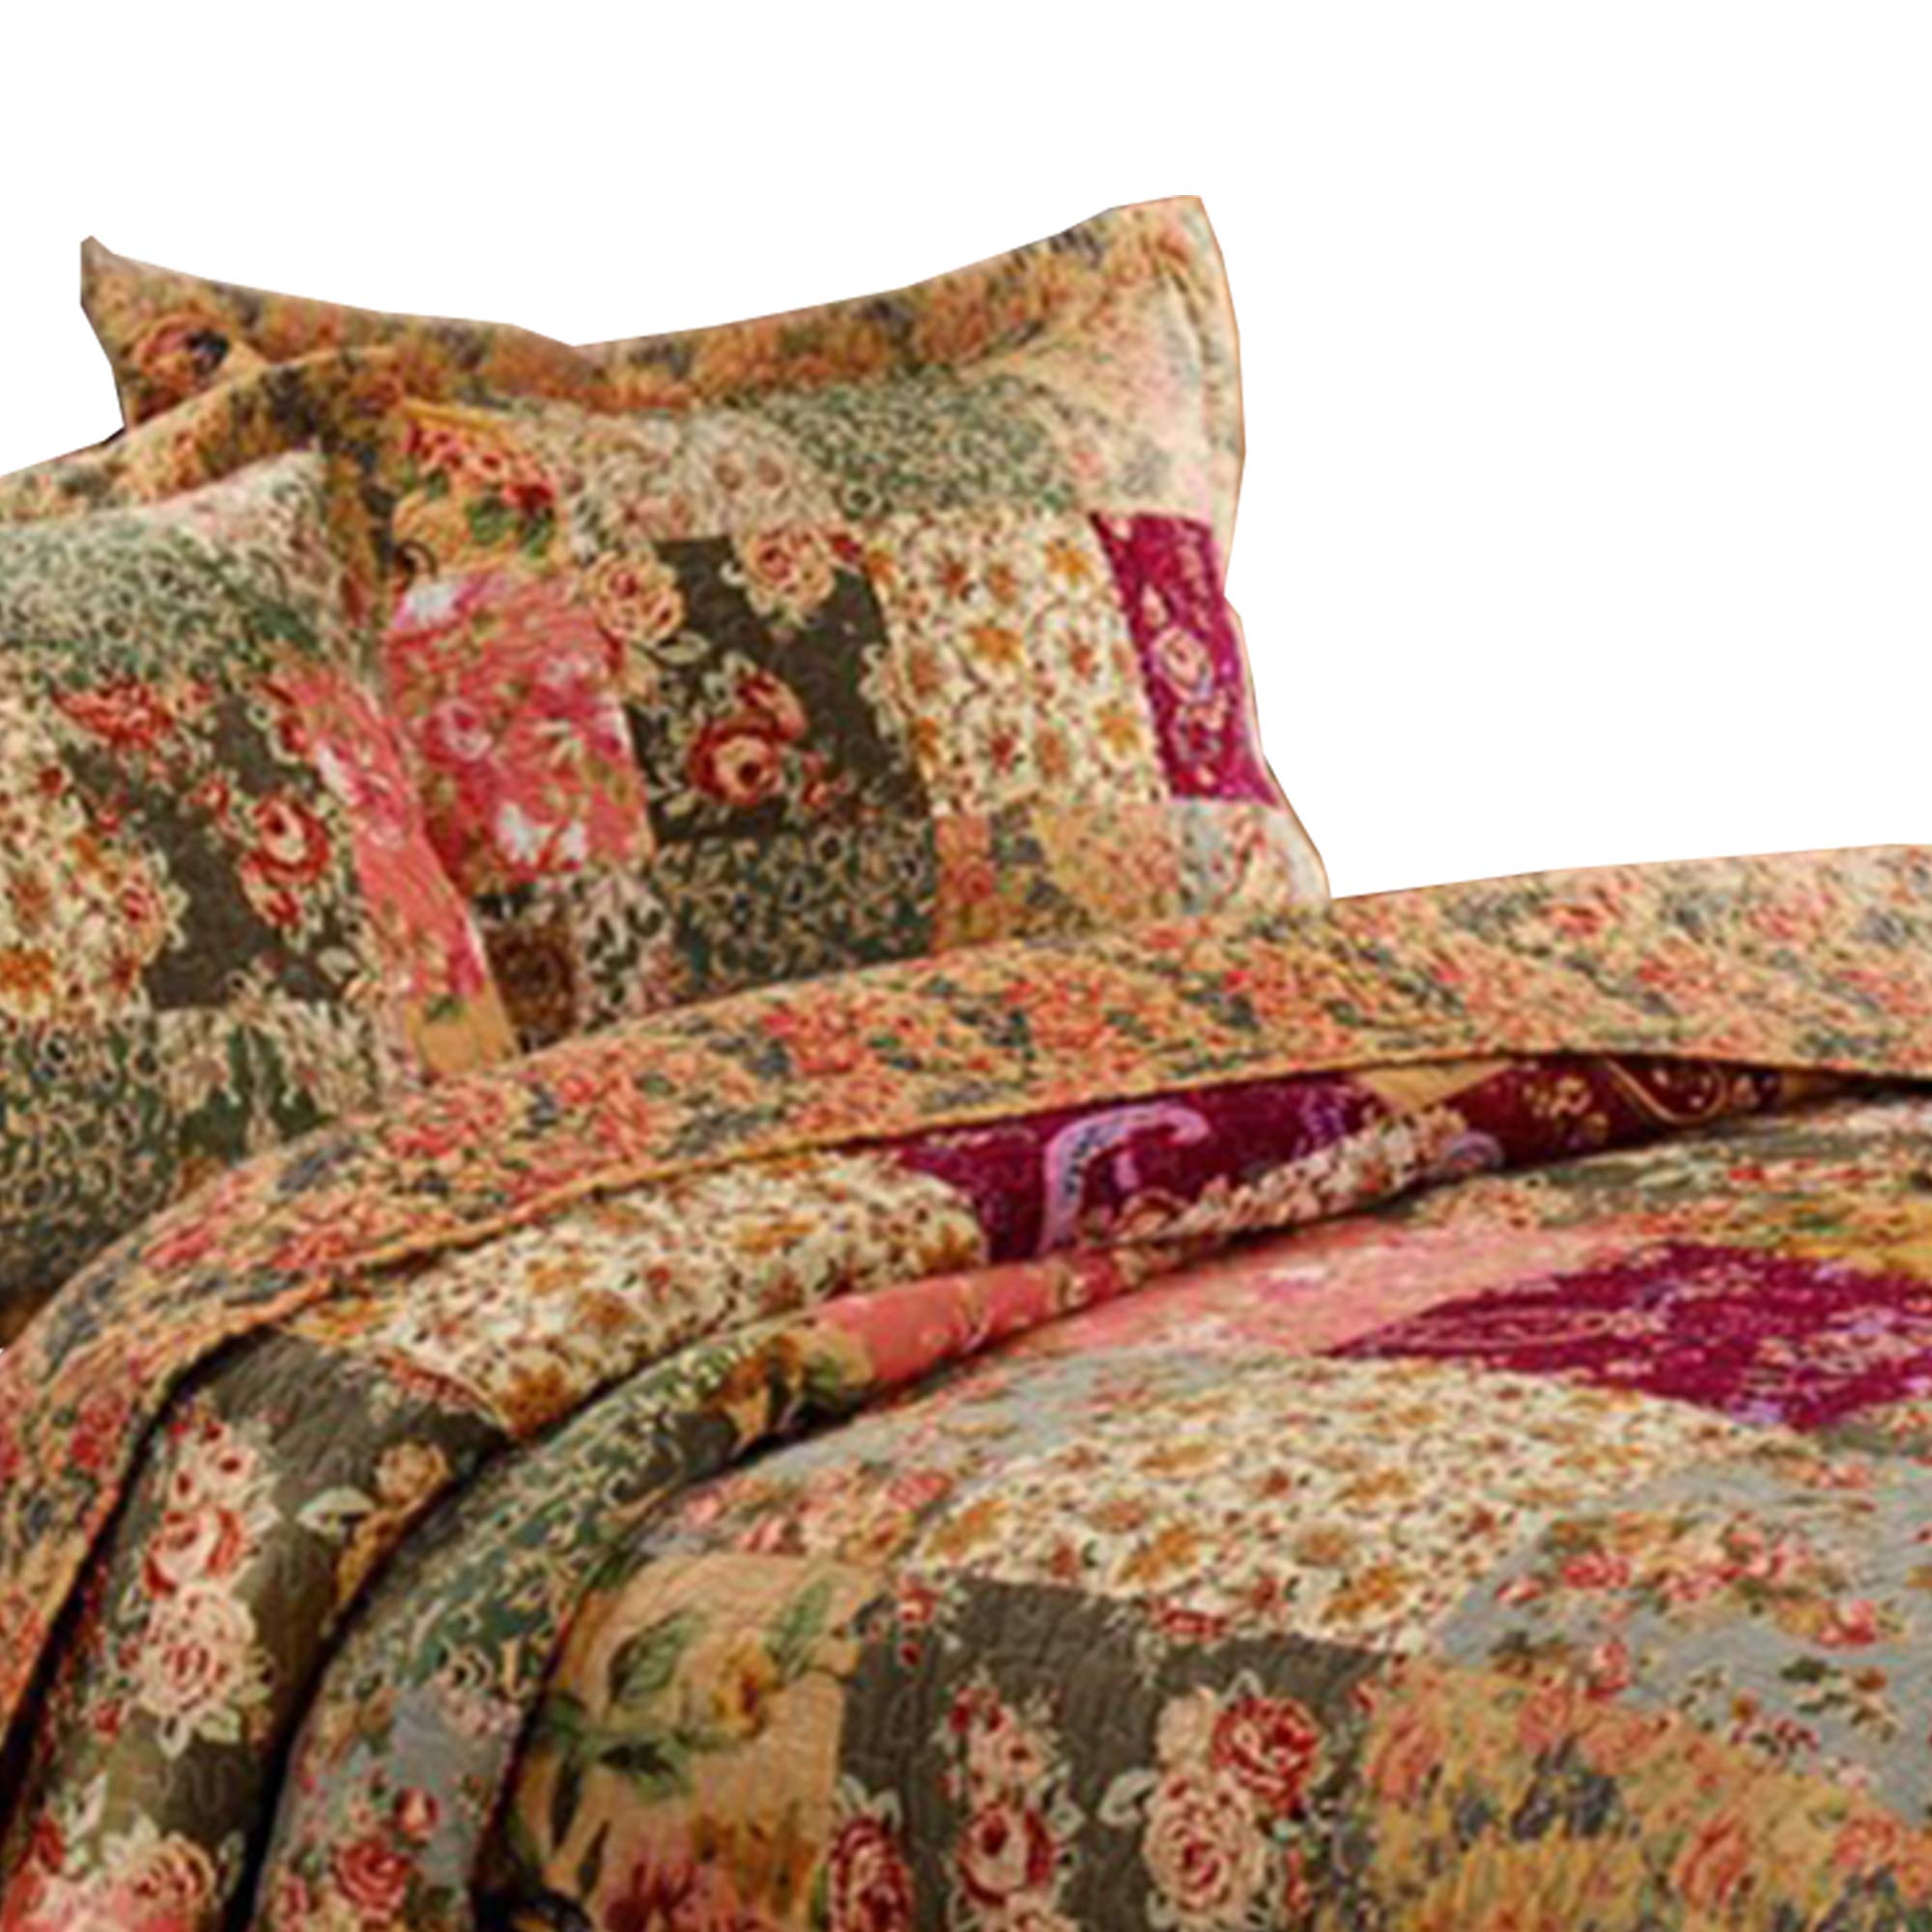 Benjara Kamet 3 Piece Fabric Queen Size Bedspread Set with Floral Prints, Multicolor